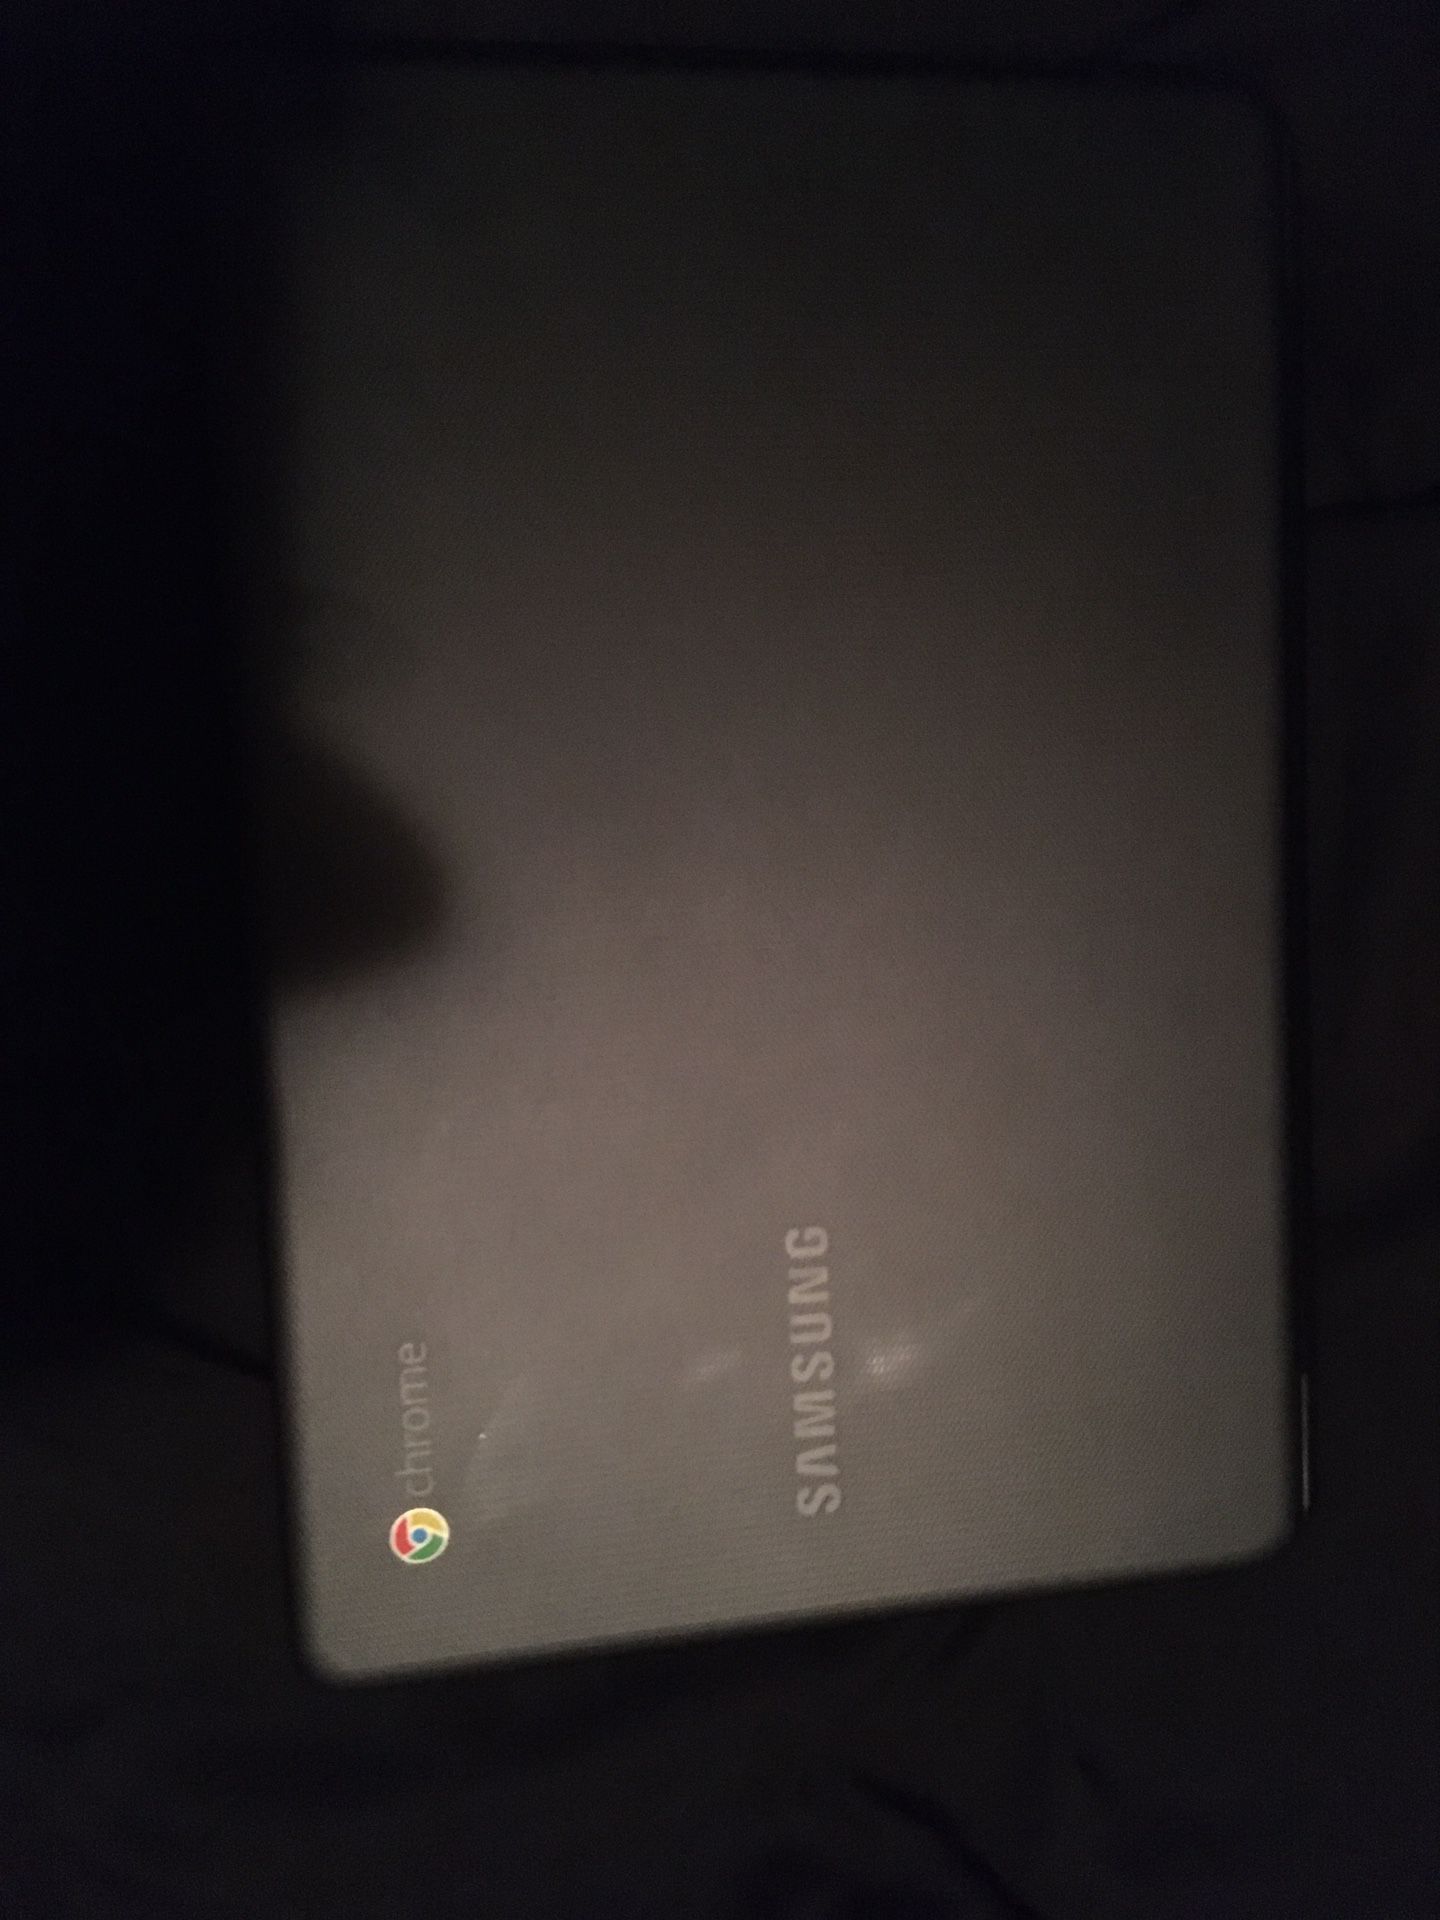 Samsung chromebook 3